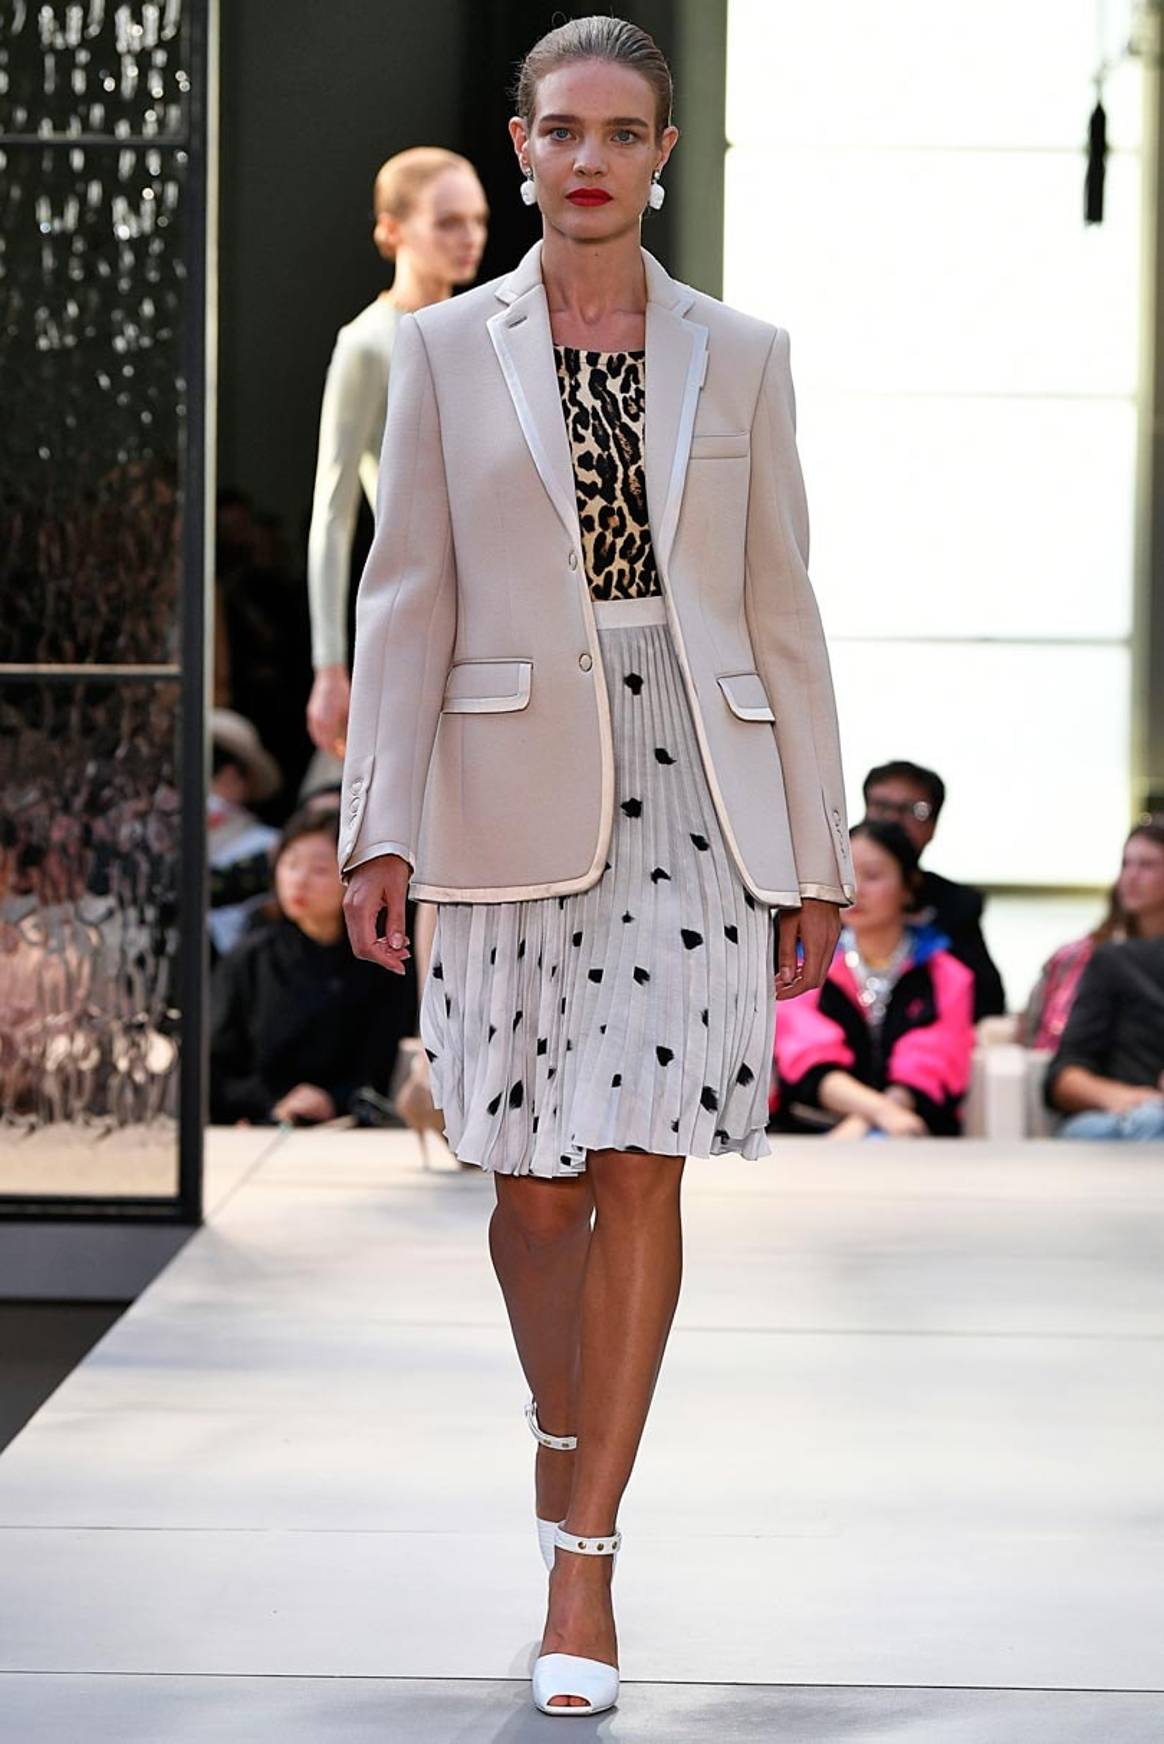 Victoria Beckham and sushi hats: London Fashion Week wraps up